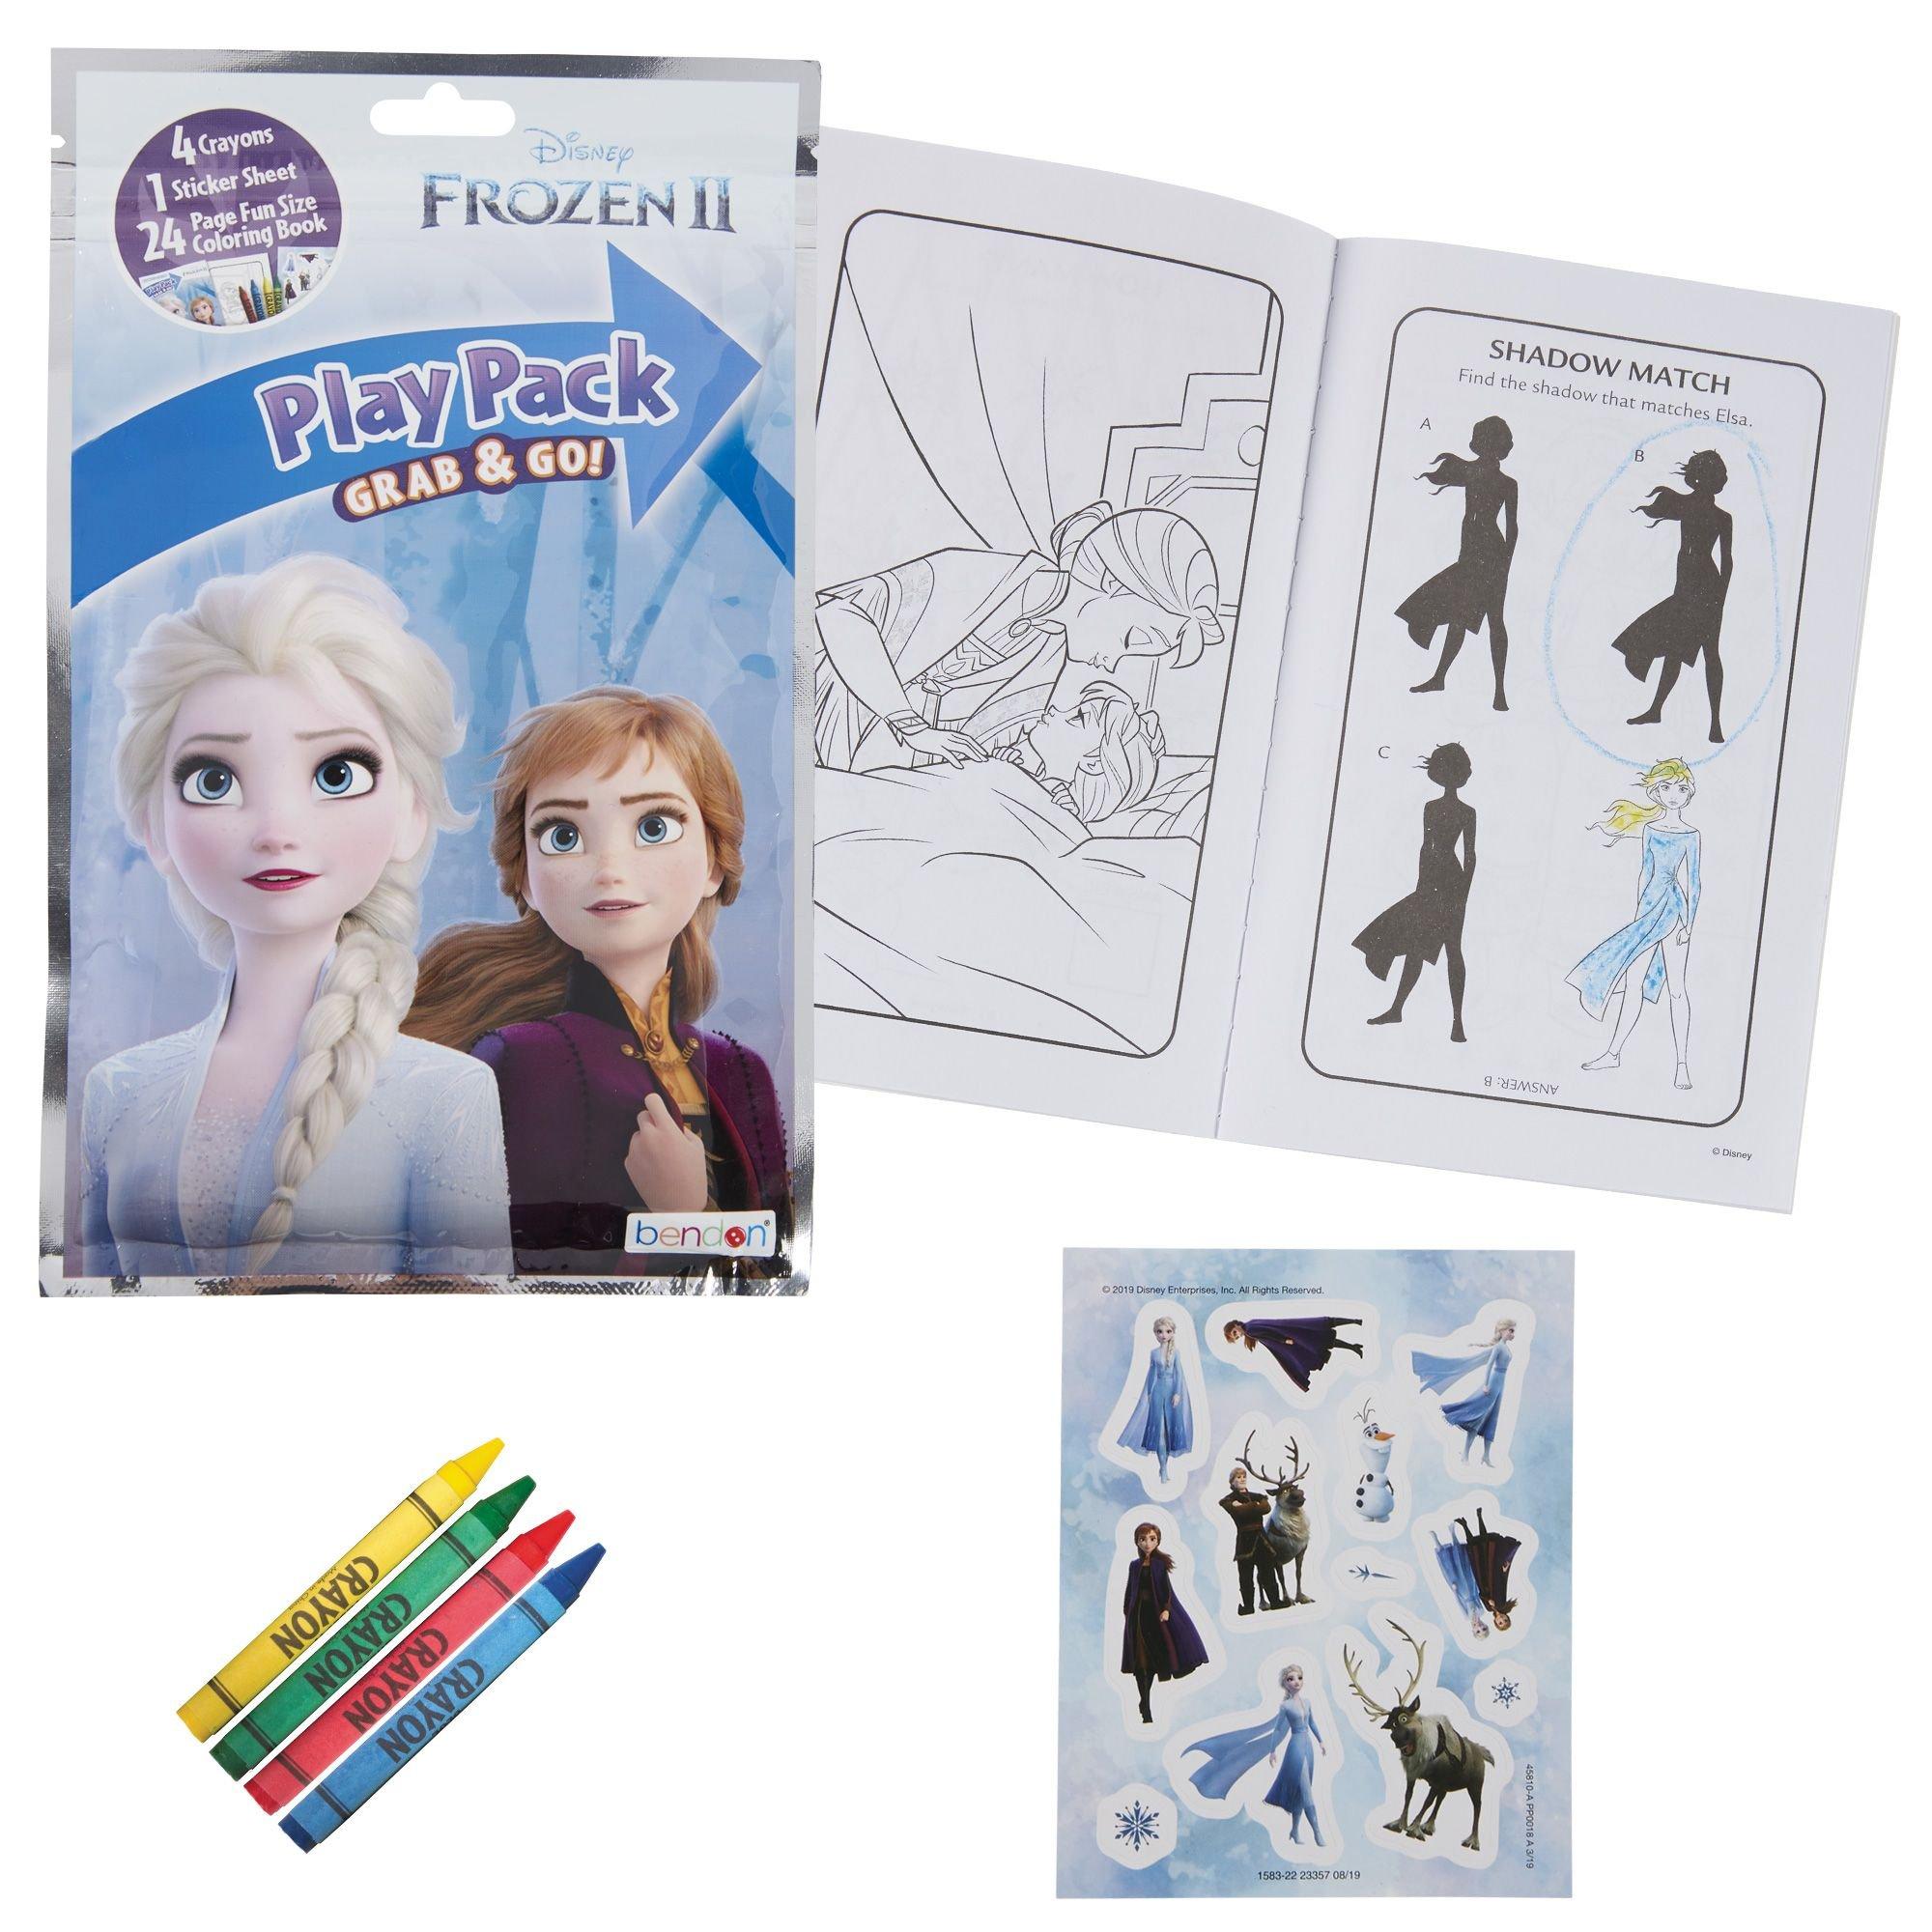 Disney Frozen Play Pack Grab & Go